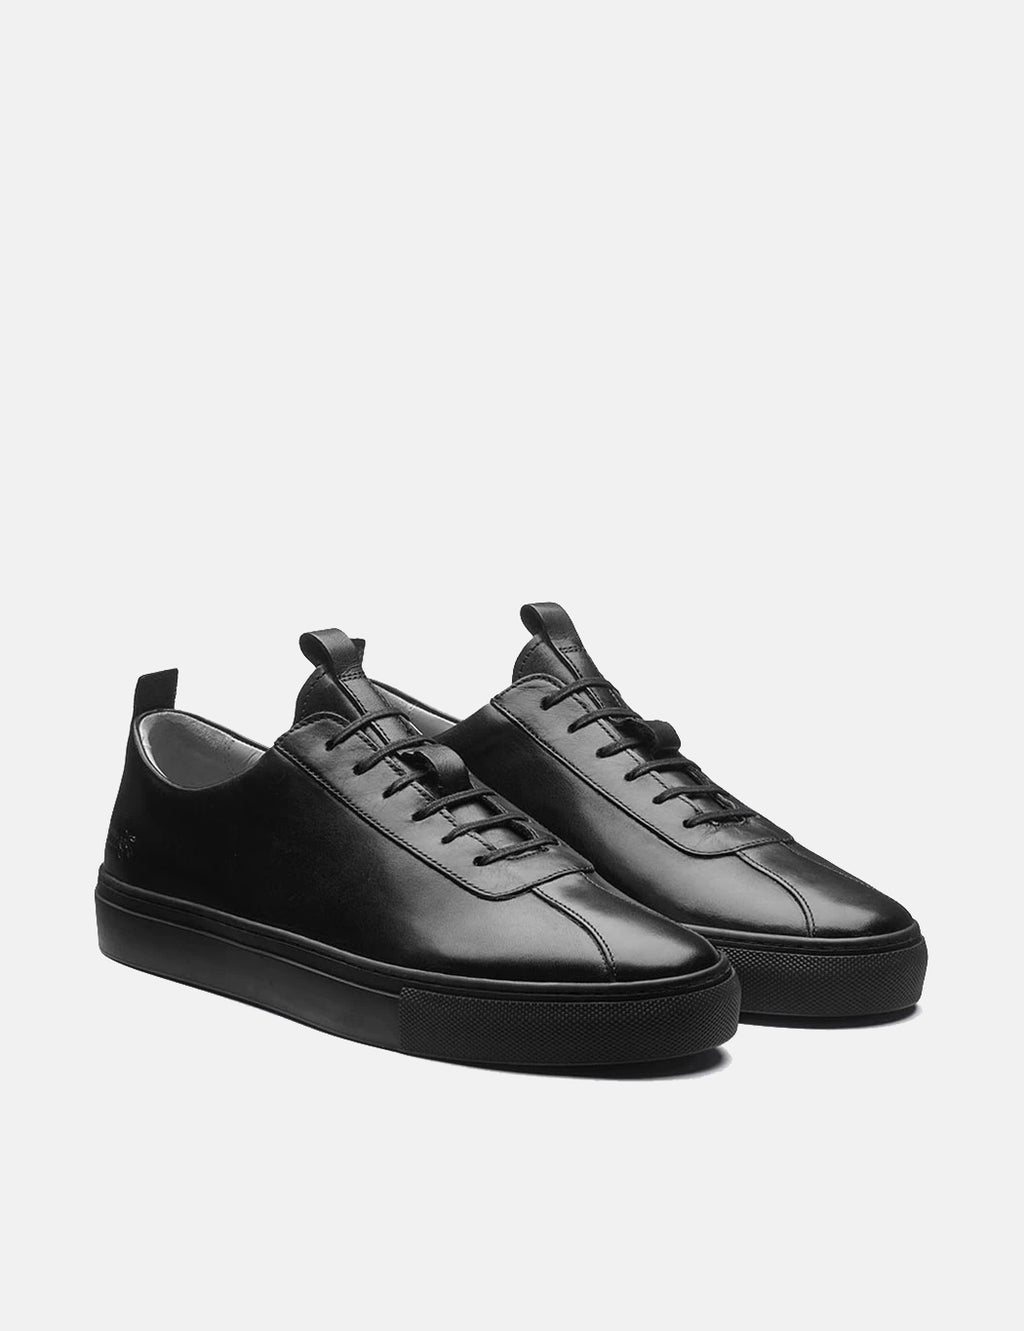 Grenson Sneakers 1 (Leather) - Black/Black | URBAN EXCESS.